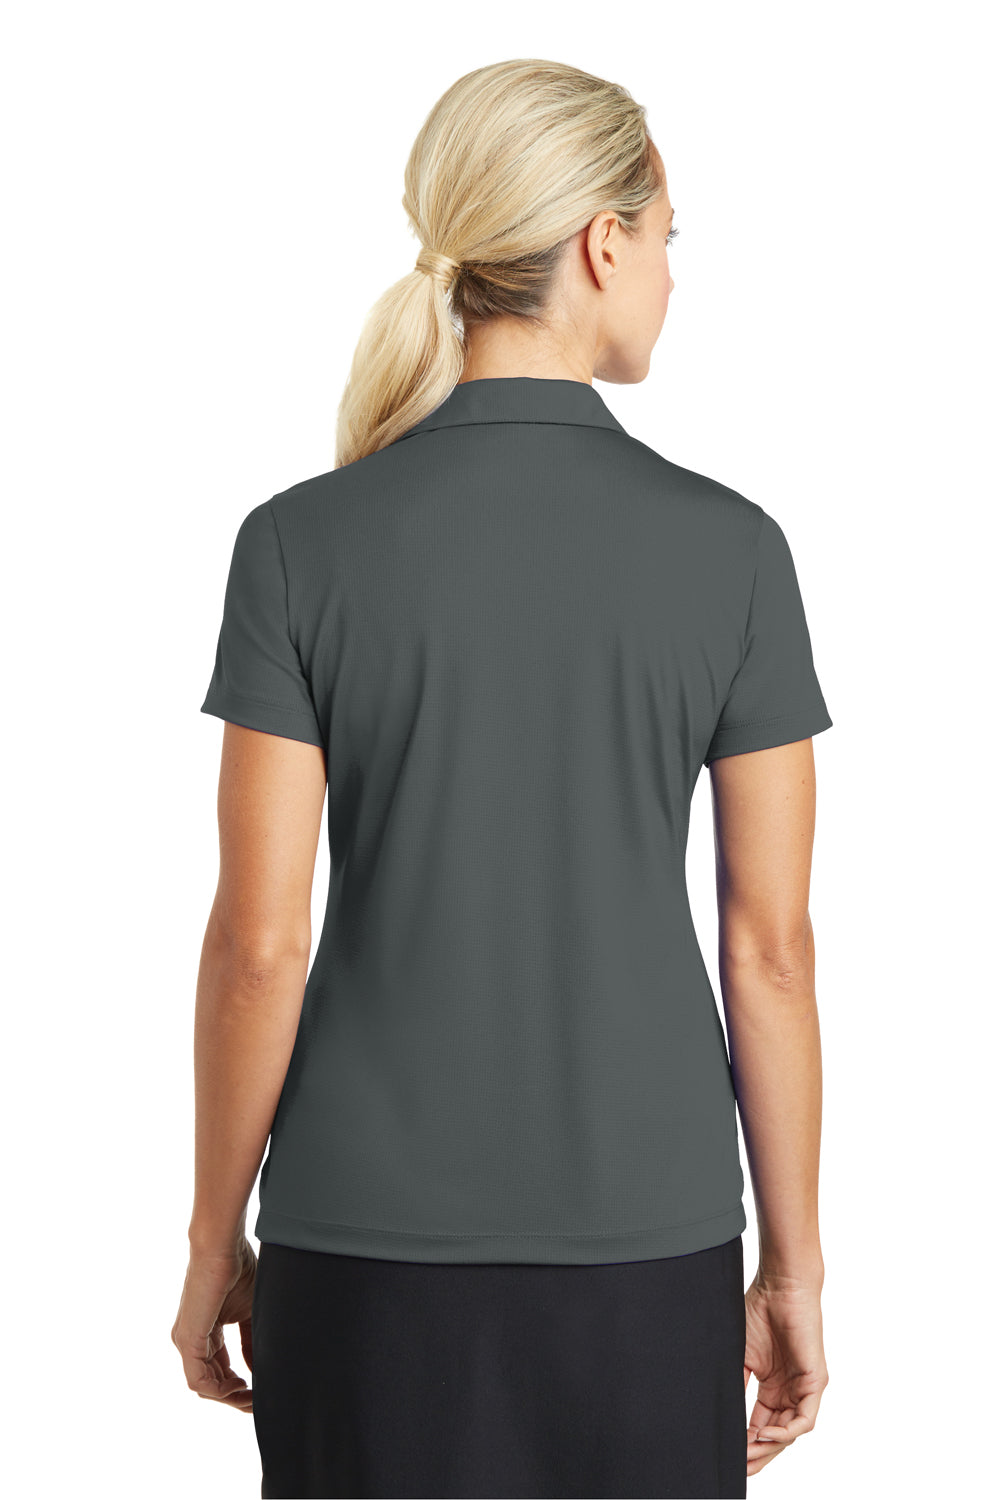 Nike 637165 Womens Dri-Fit Moisture Wicking Short Sleeve Polo Shirt Anthracite Grey Model Back